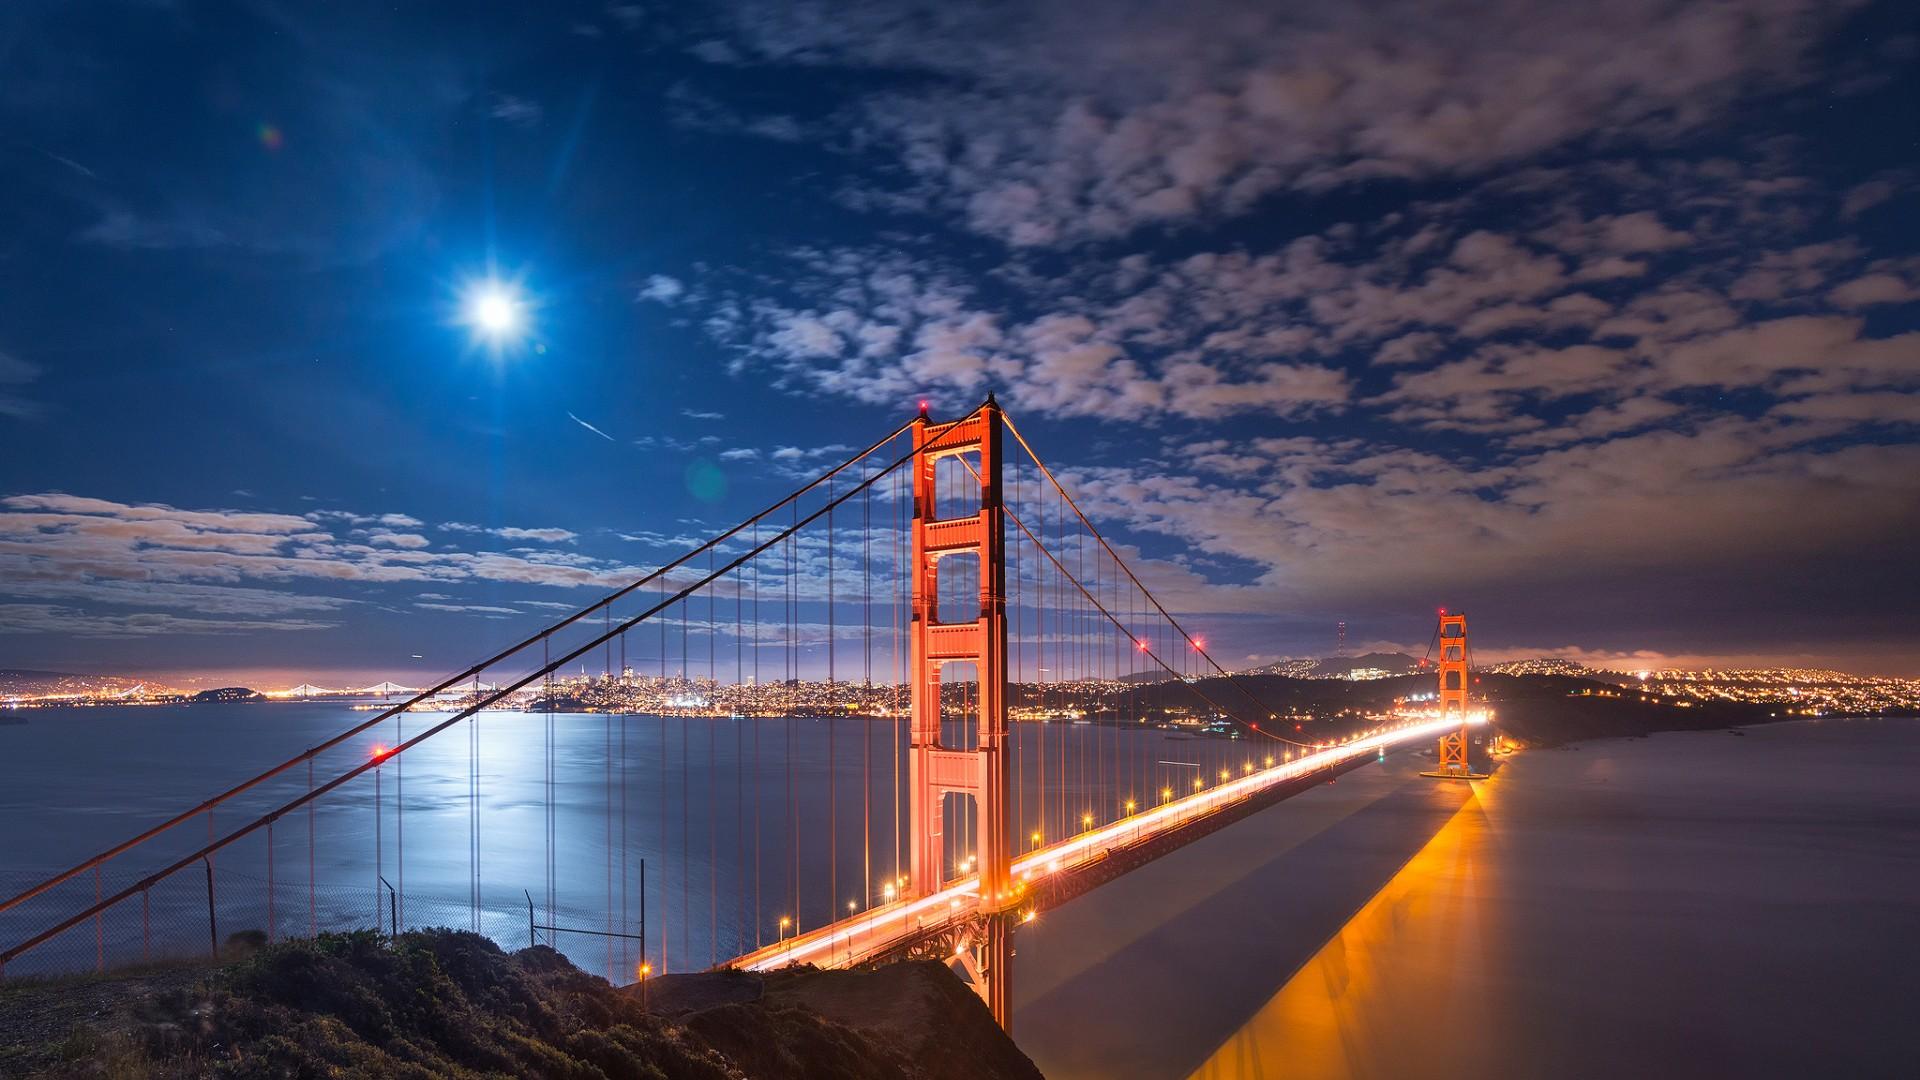 Golden Gate Bridge At Night Wallpaper - Backiee